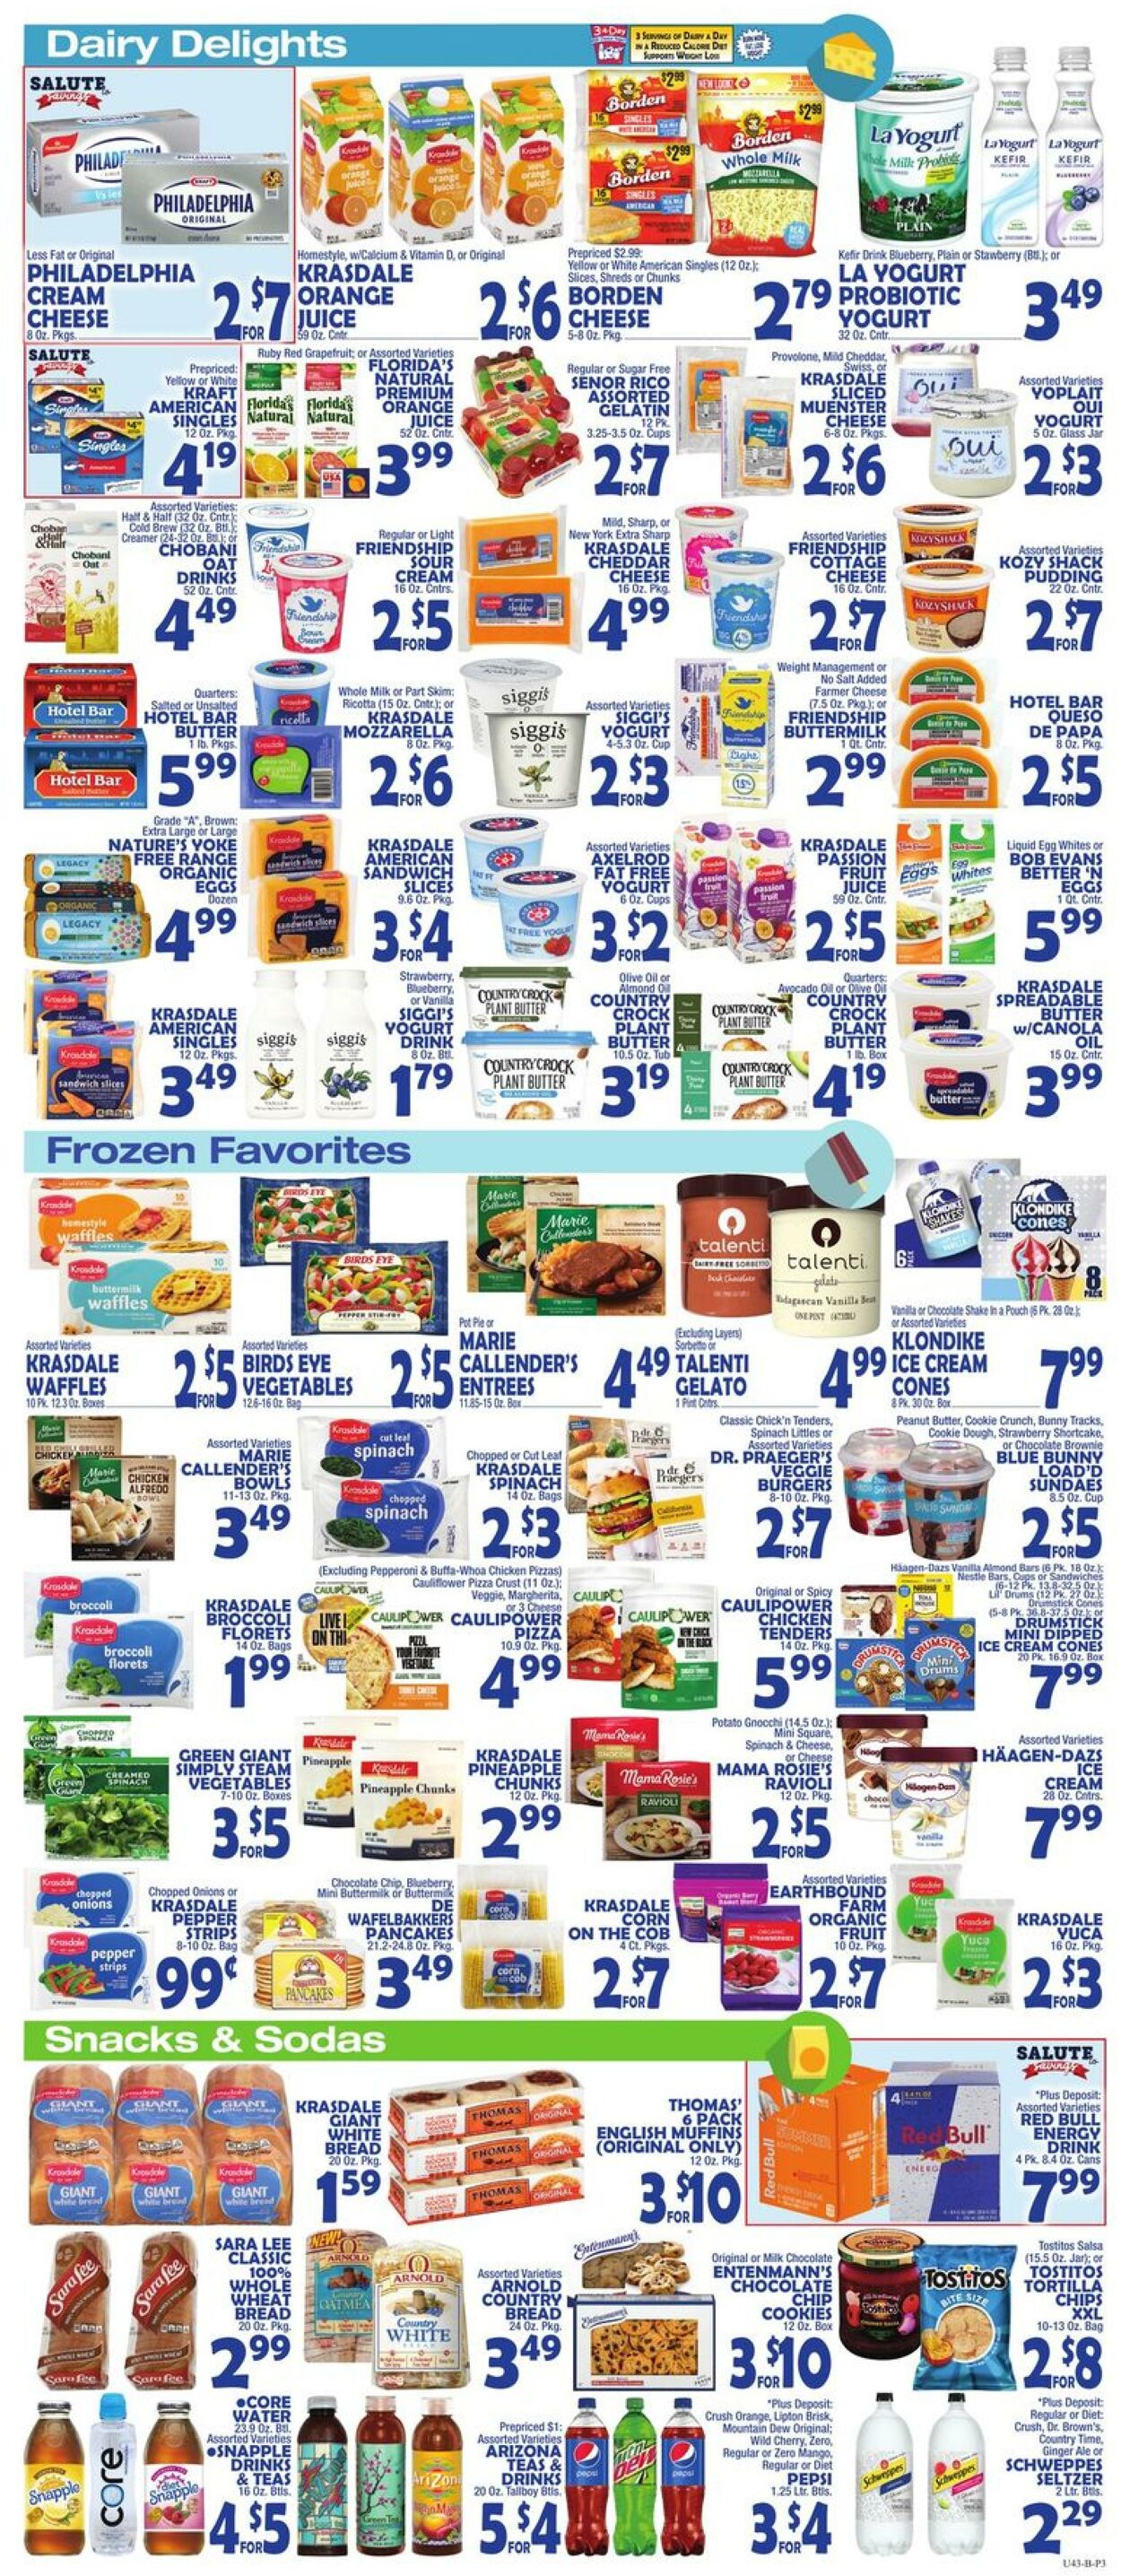 Weekly ad Bravo Supermarkets 05/20/2022 - 05/26/2022